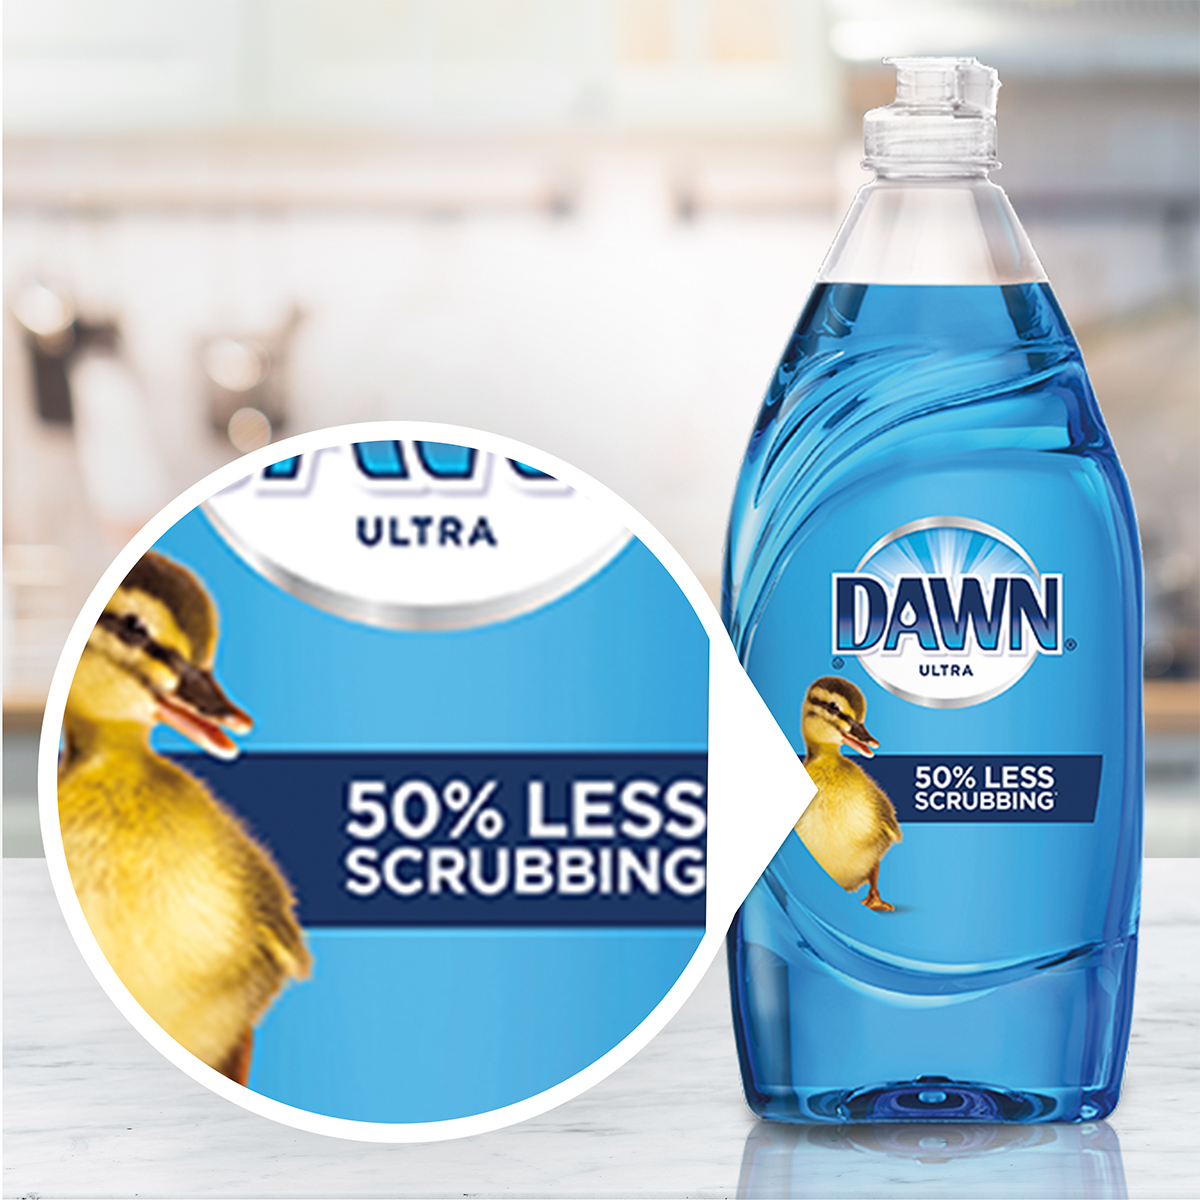 Original Scent Dish Detergent - Dawn Ultra